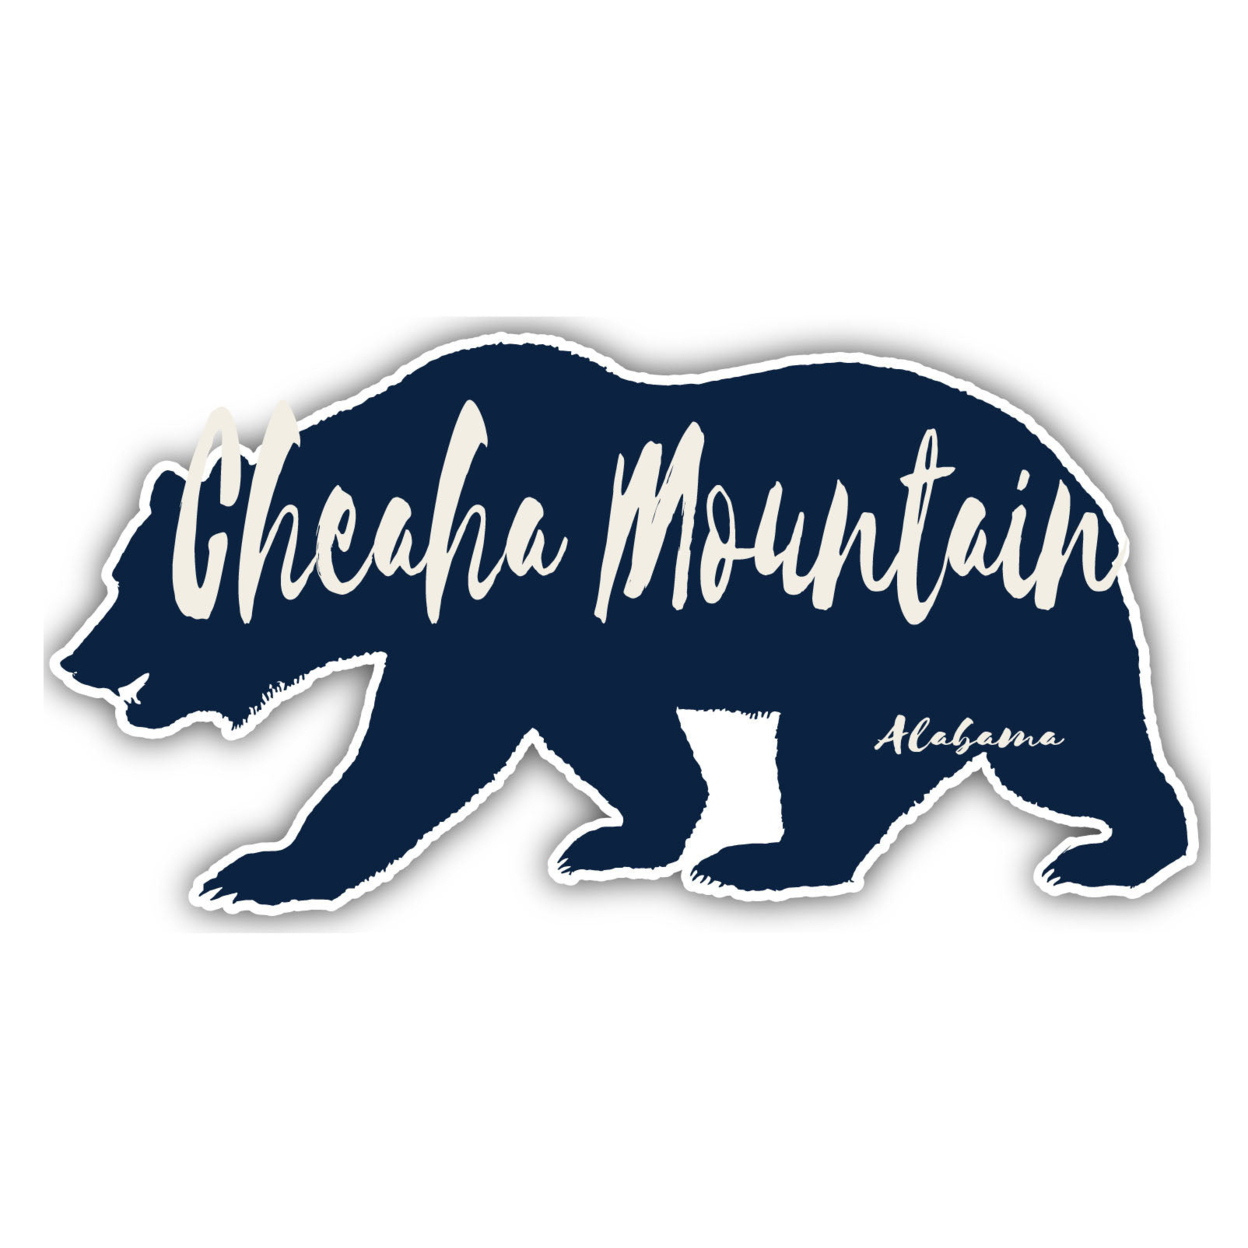 Cheaha Mountain Alabama Souvenir Decorative Stickers (Choose Theme And Size) - Single Unit, 12-Inch, Tent